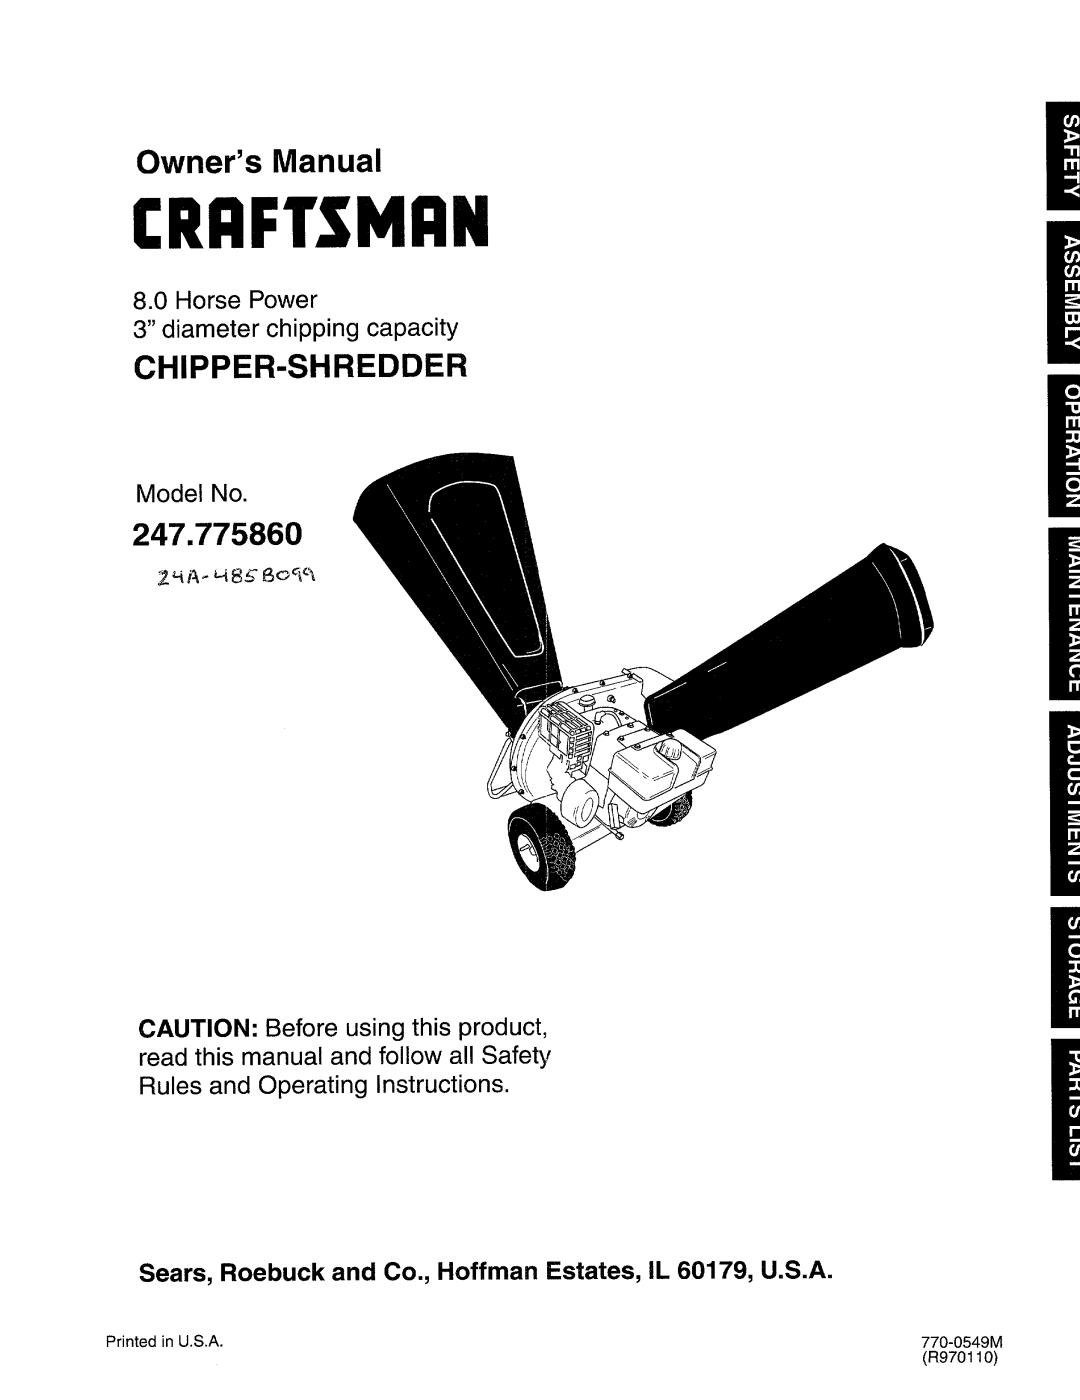 Craftsman manual Craftsman, Chipper-Shredder, 247.775860, Horse Power 3 diameter chipping capacity, Model No 